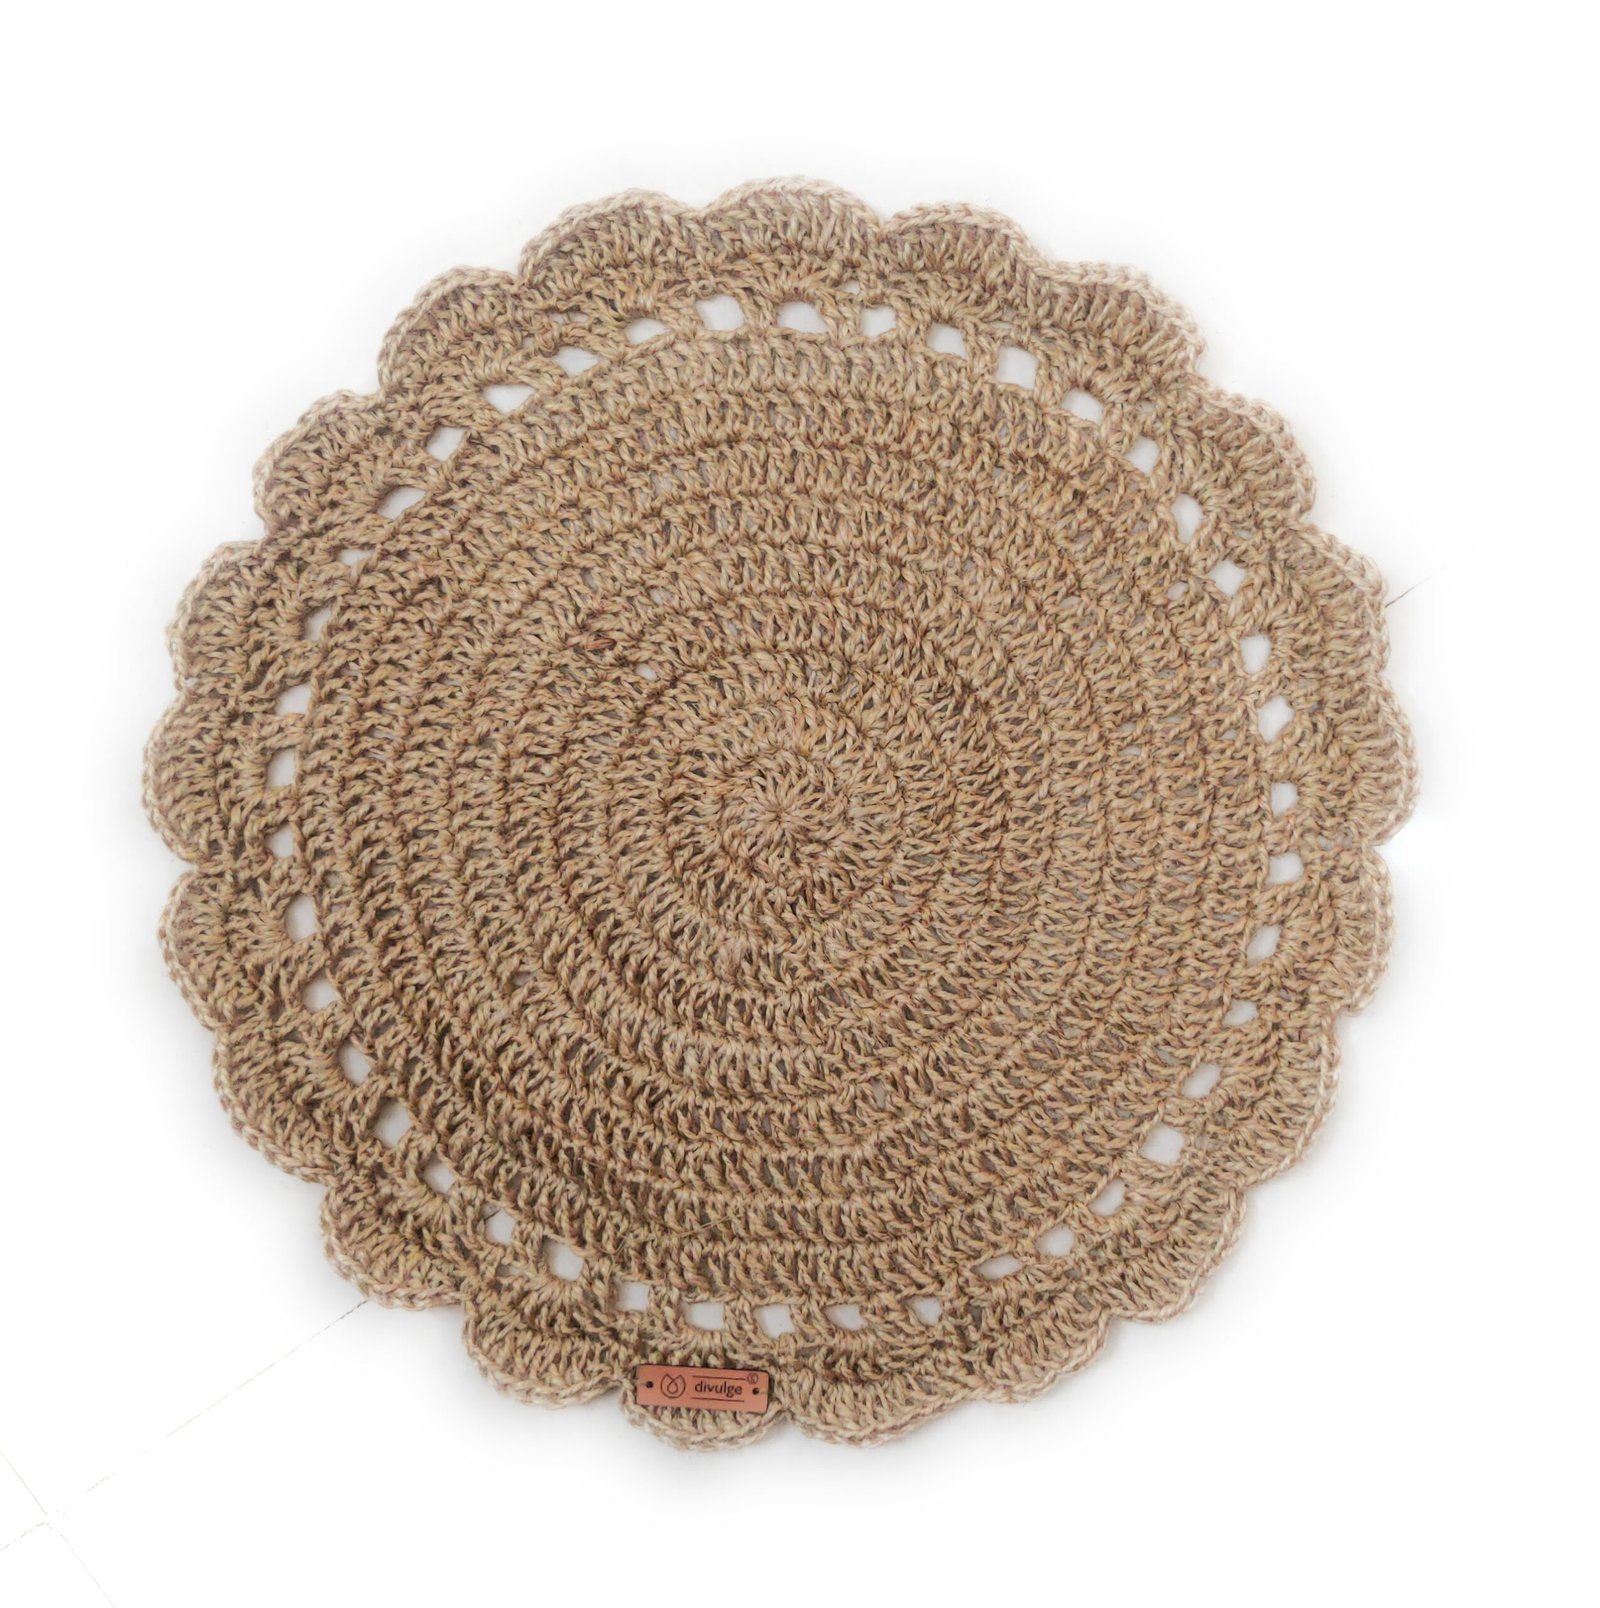 Divulge Instagram crochet round mats